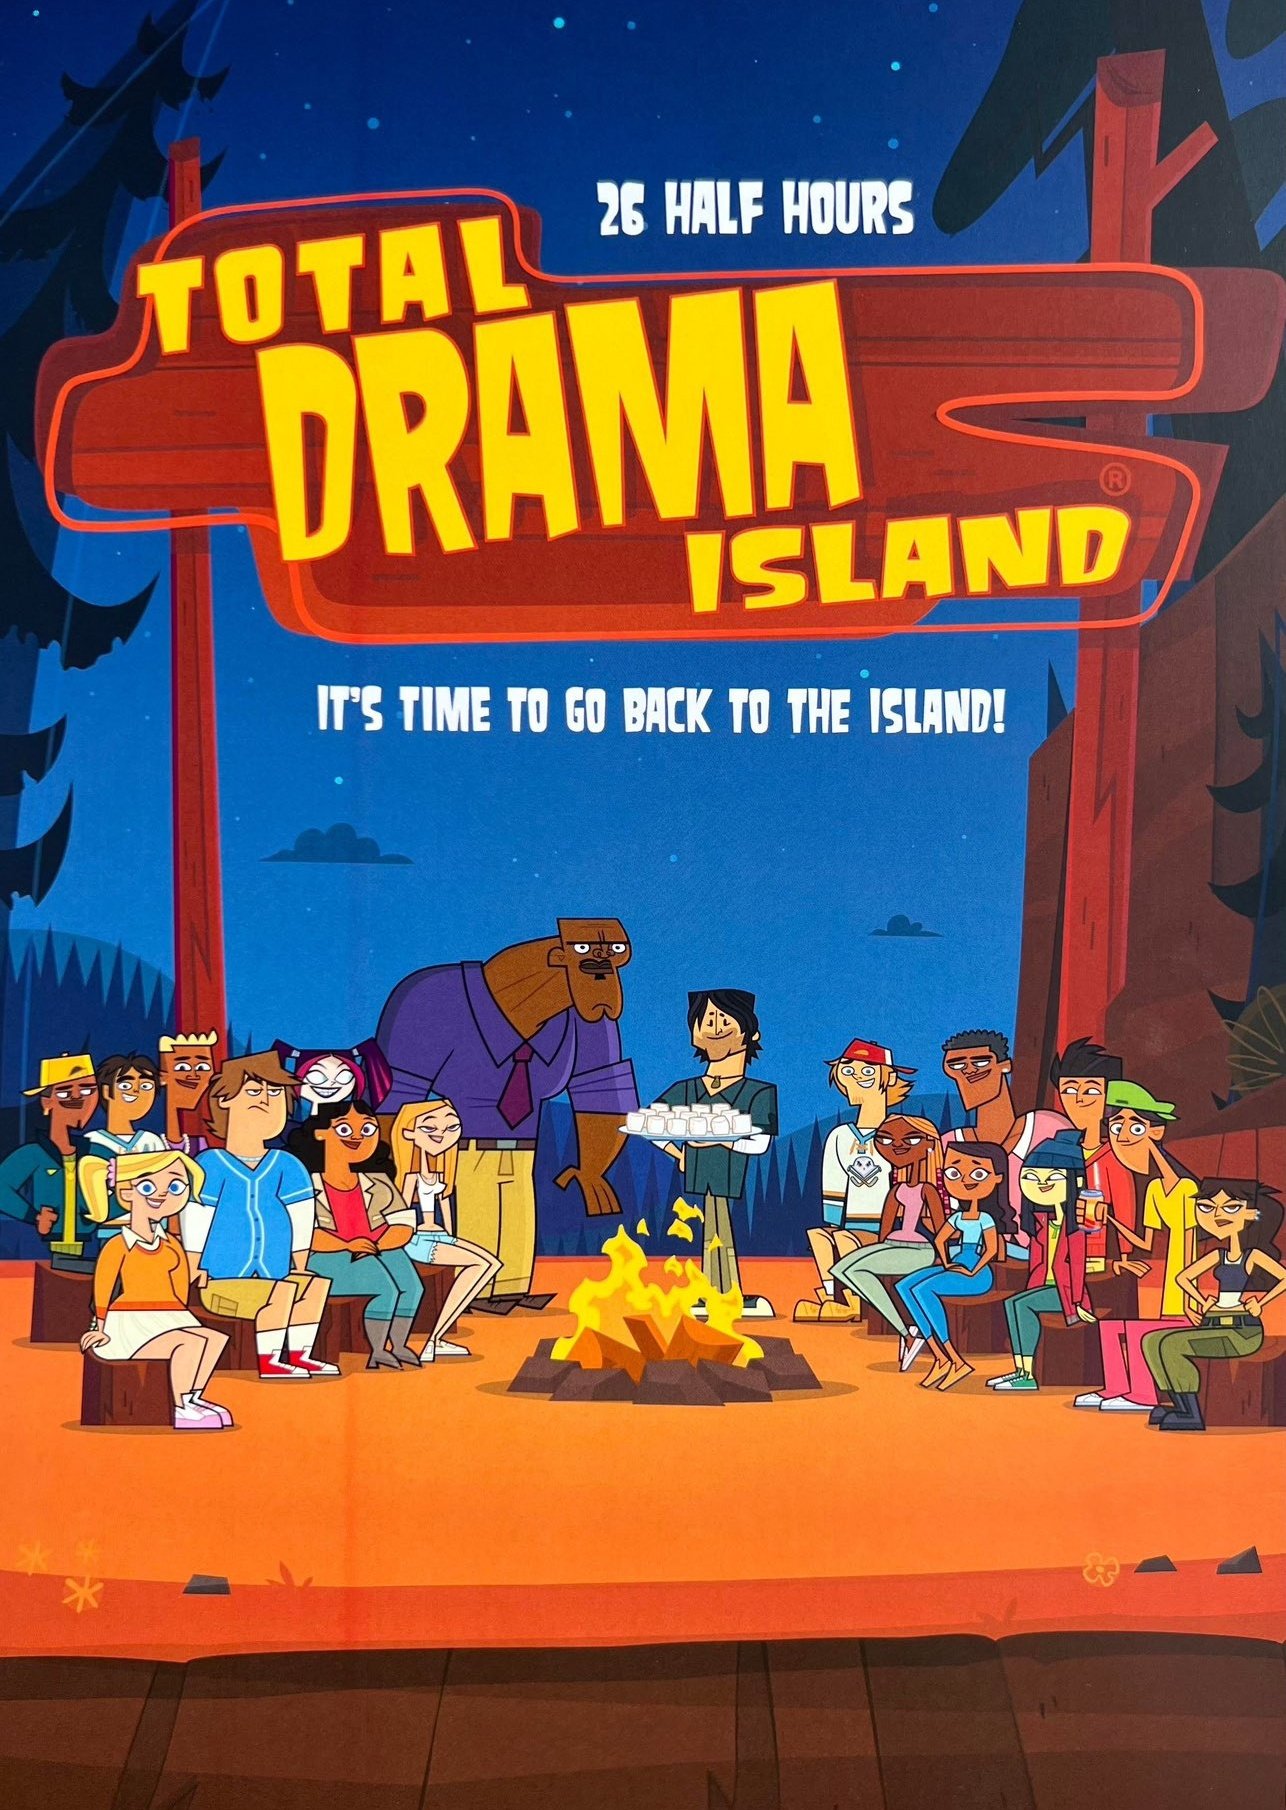 CBBC - Total Drama Island: Reboot